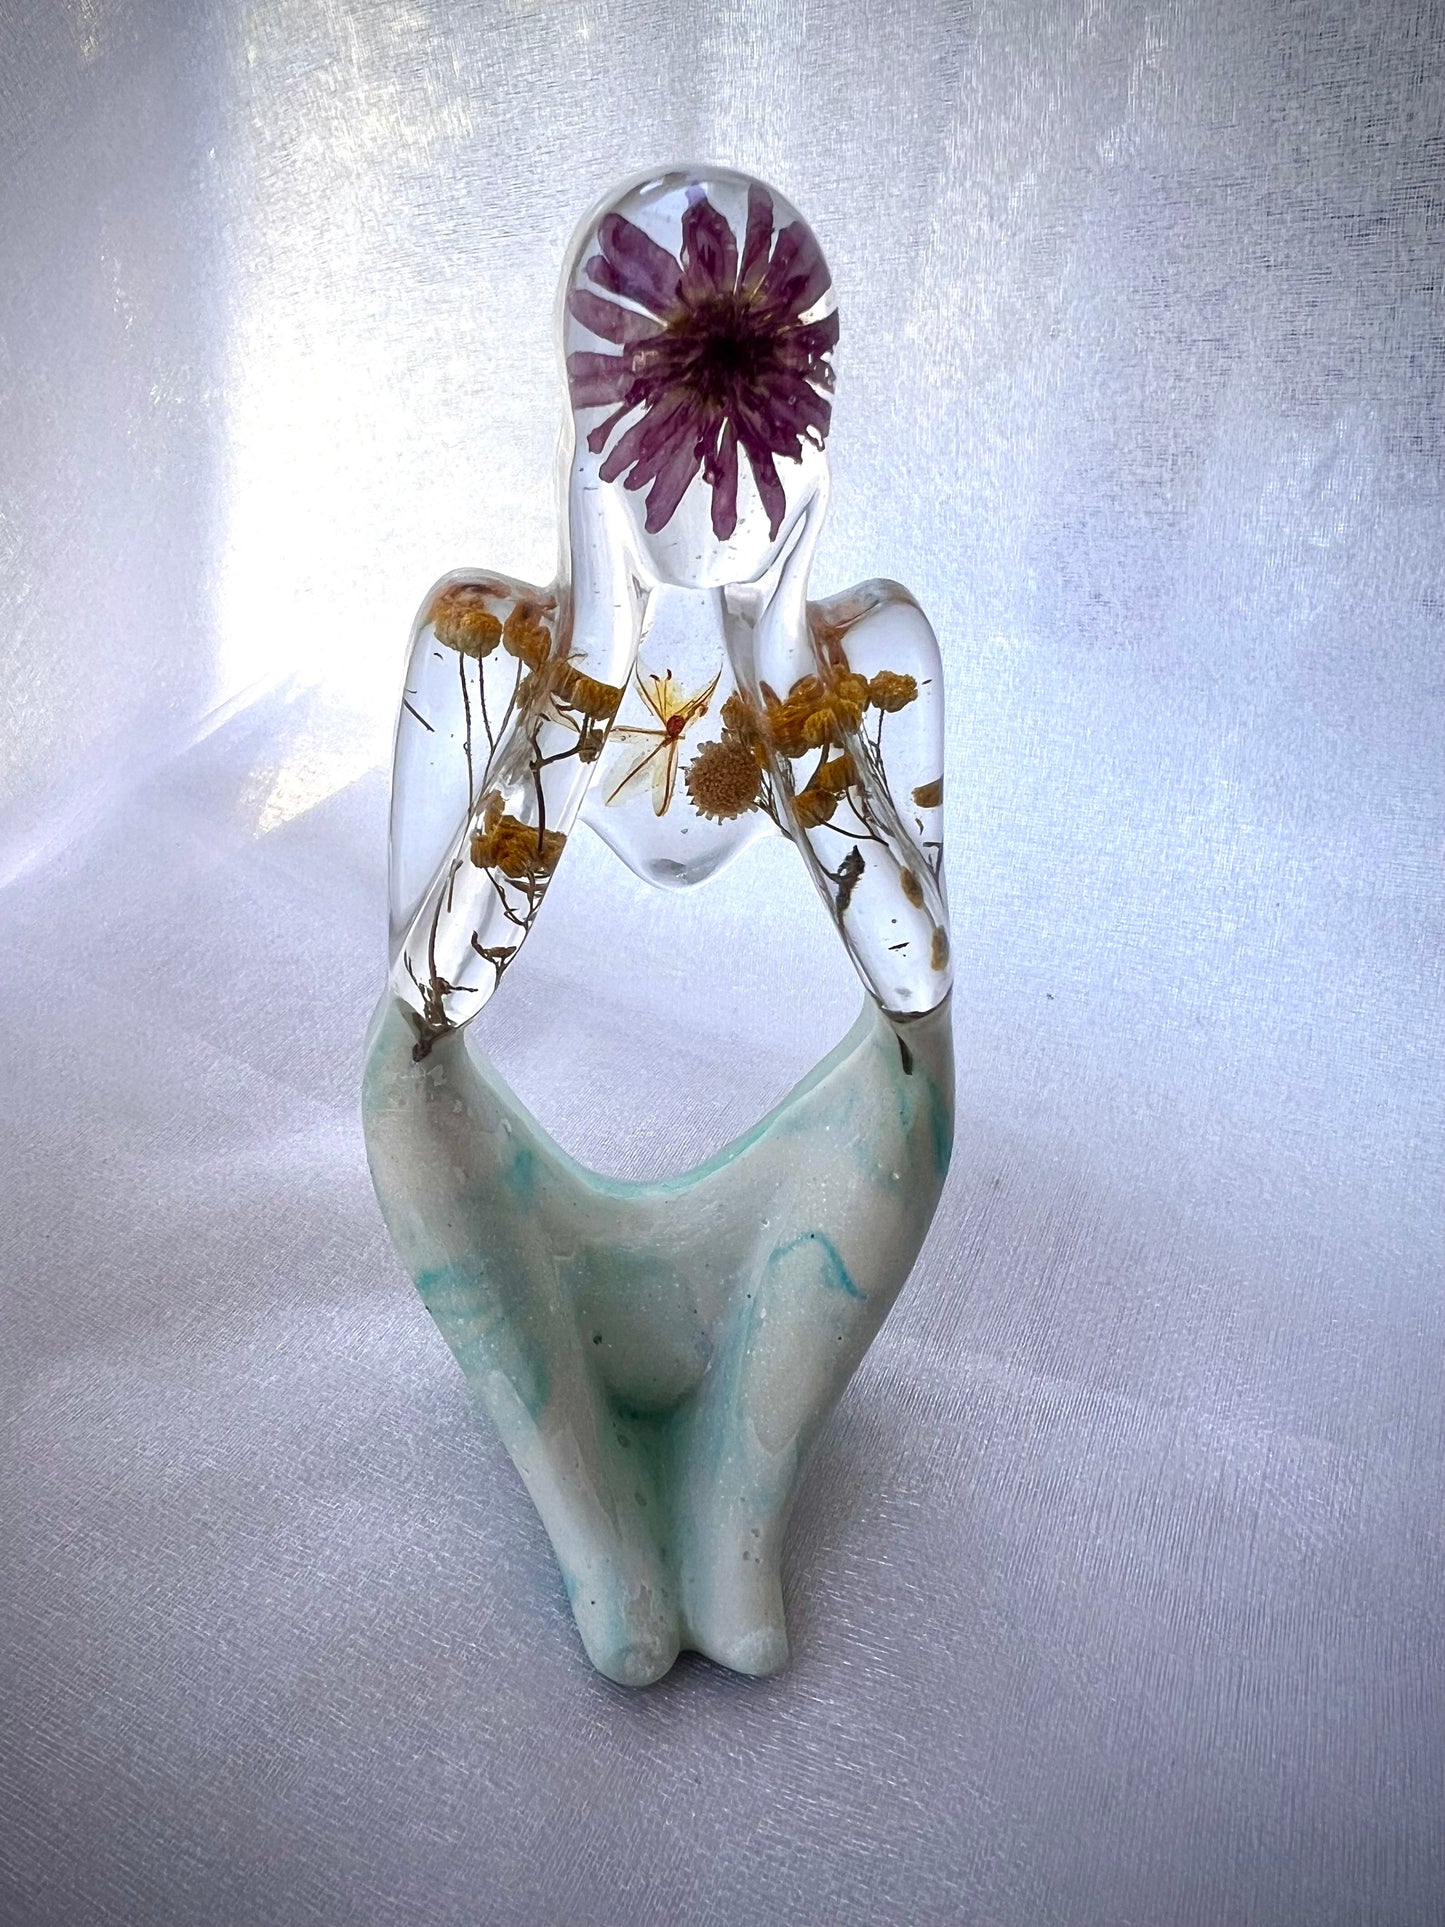 Thinker dream Purple daisy fynbos real natural wild flower figurine statute decor